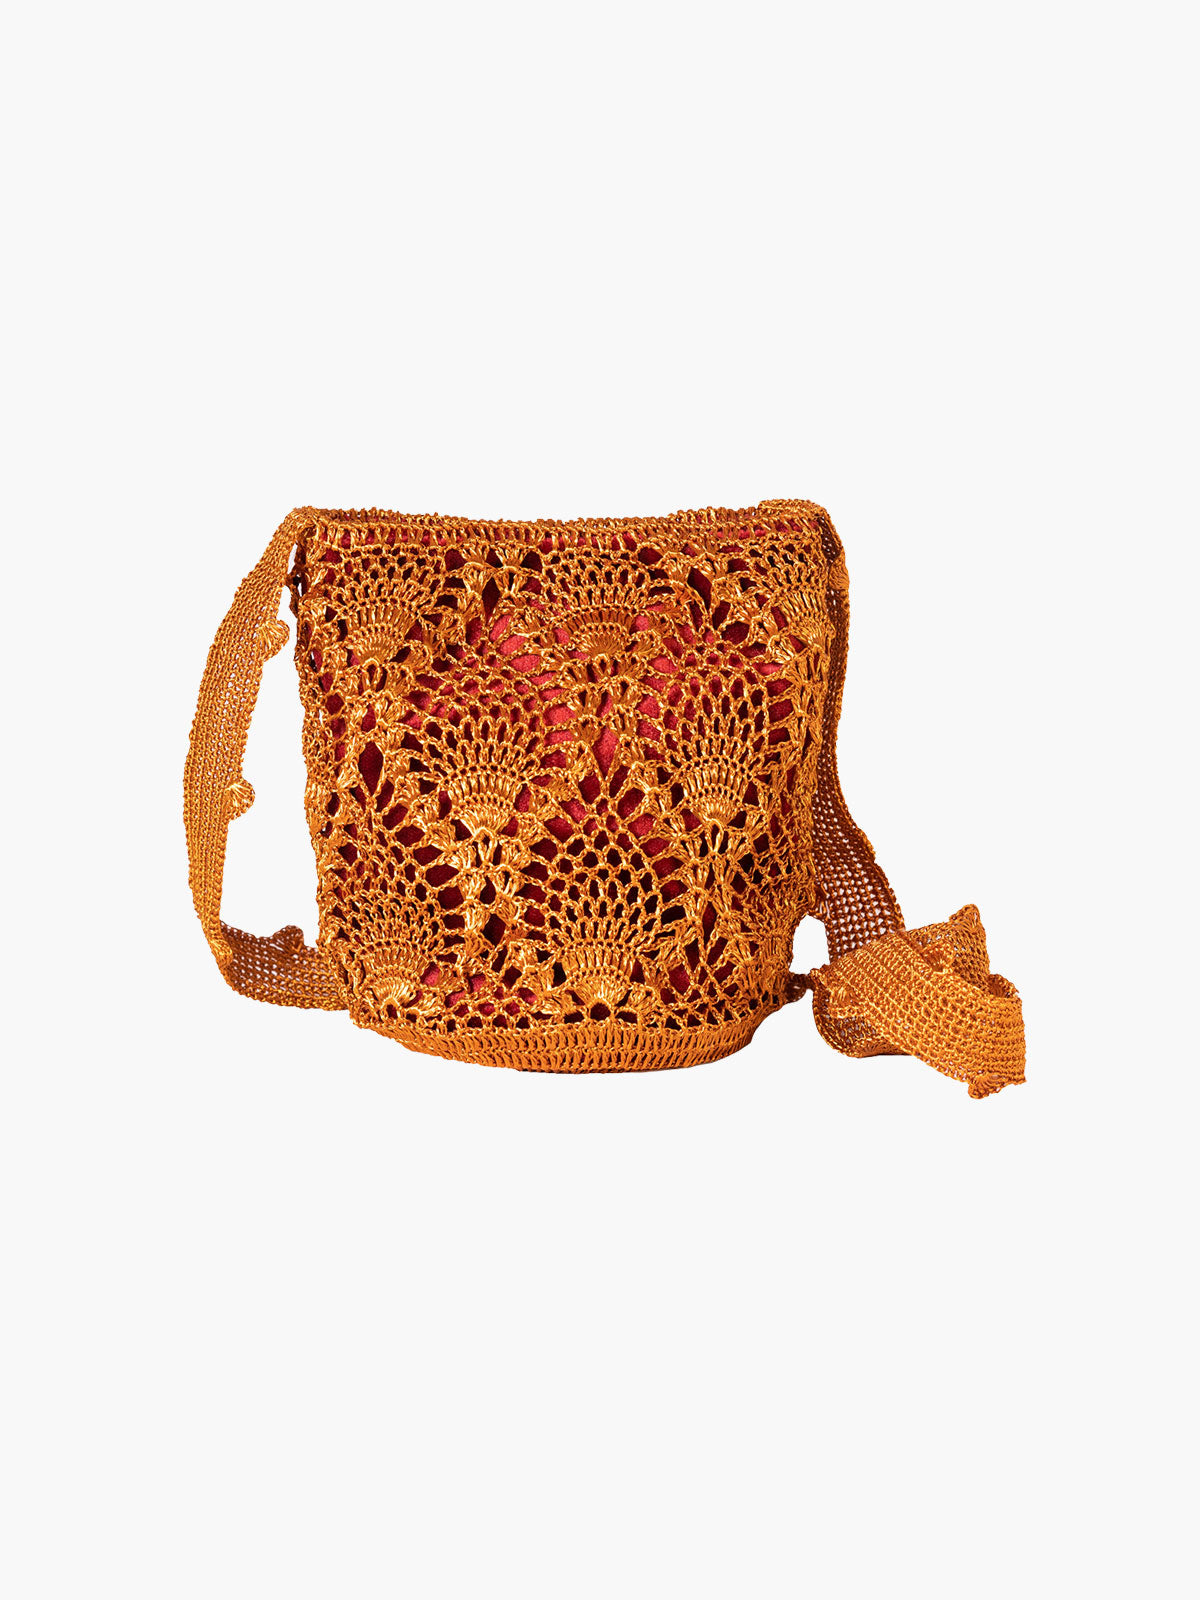 Pineapple Weave Mochila | Copper & Wine - Fashionkind